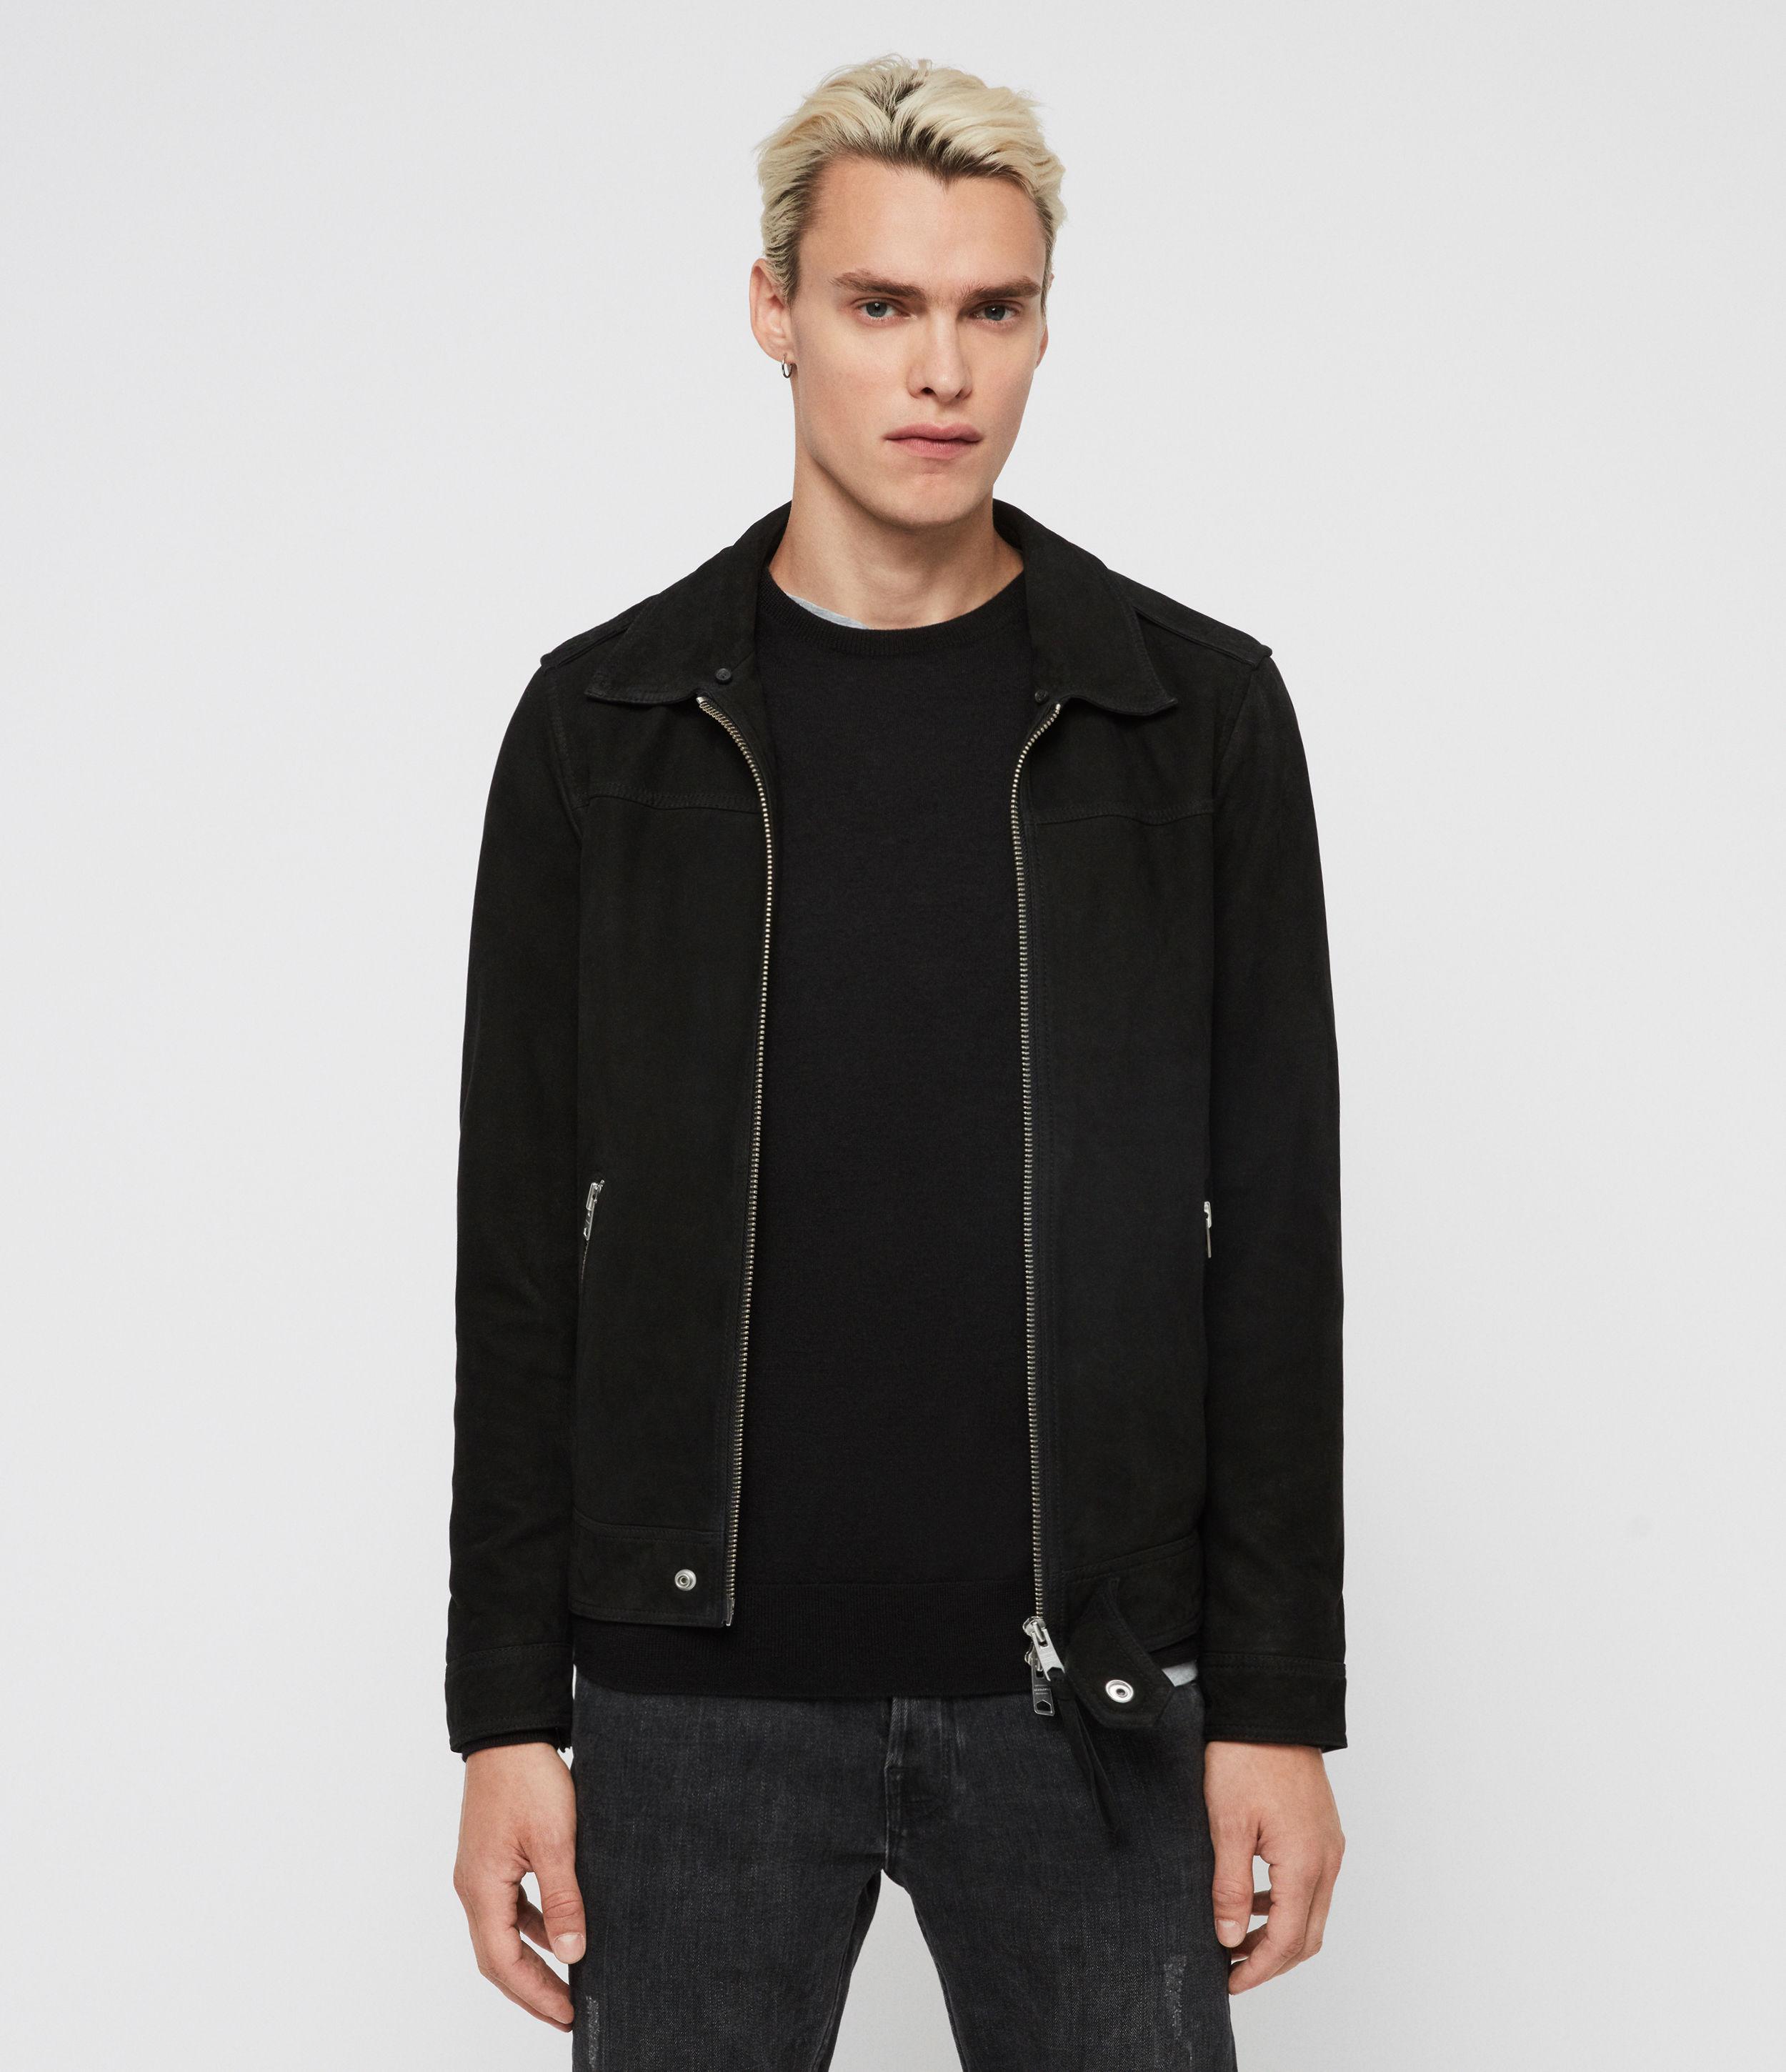 AllSaints Lock Leather Jacket in Black for Men - Lyst